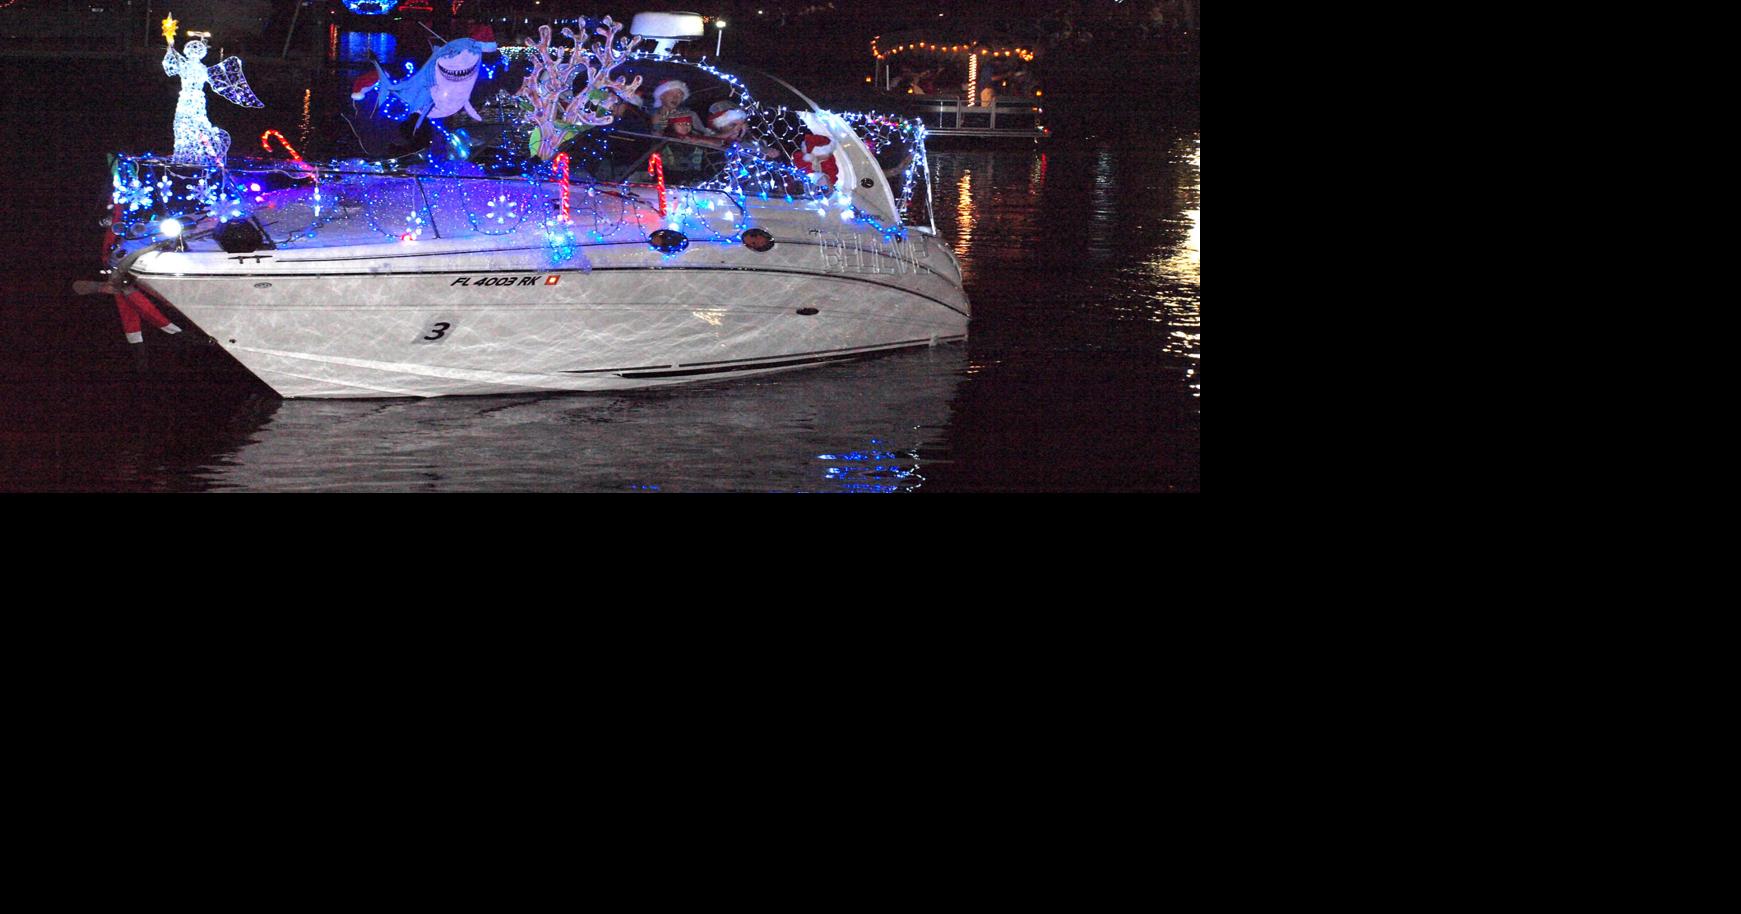 Christmas boat parade lights up night along river News